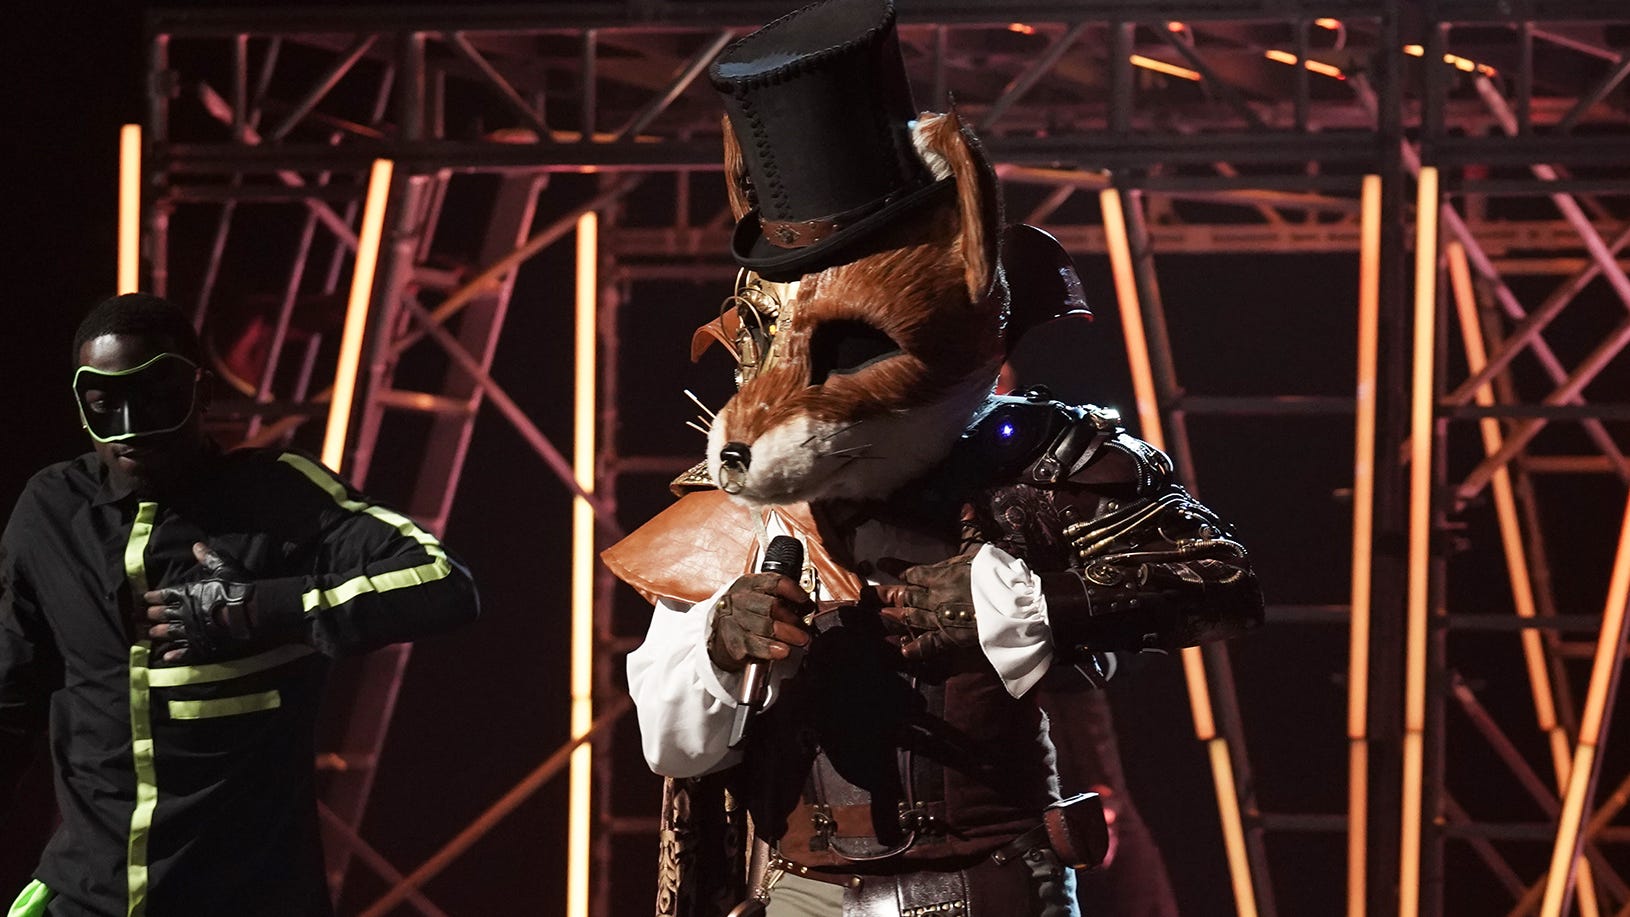 The Masked Singer Finale Season 2 Winner Fox Hightails It To Top